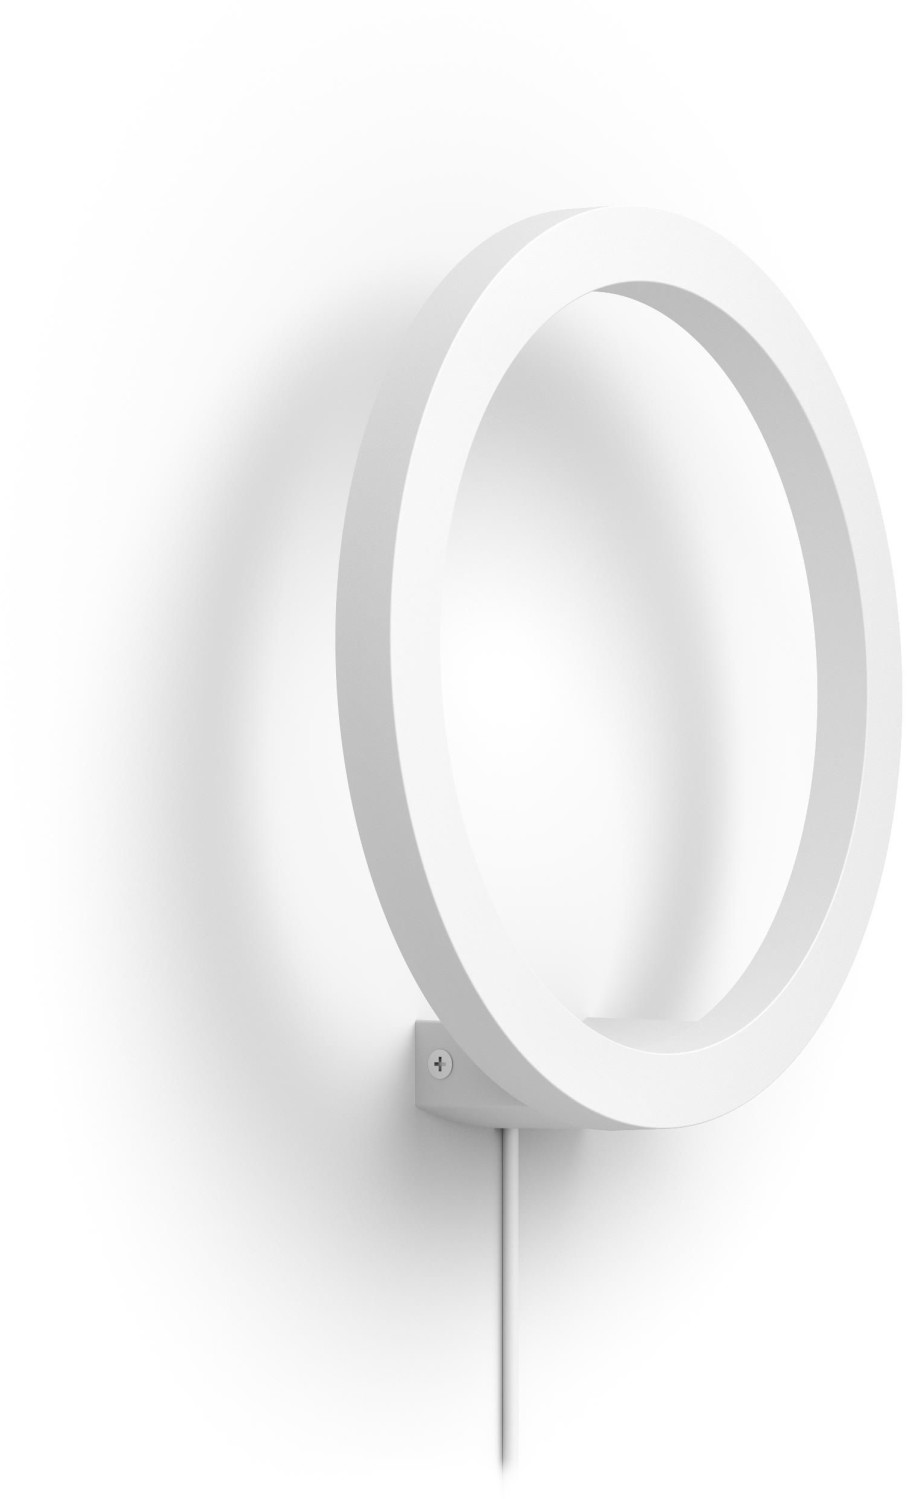 dimmbar kompatibel mit  Alexa LED Wandleuchte Sana Amb steuerbar via App Philips Hue White /& Col 16 Mio Echo, Echo Dot schwarz Farben